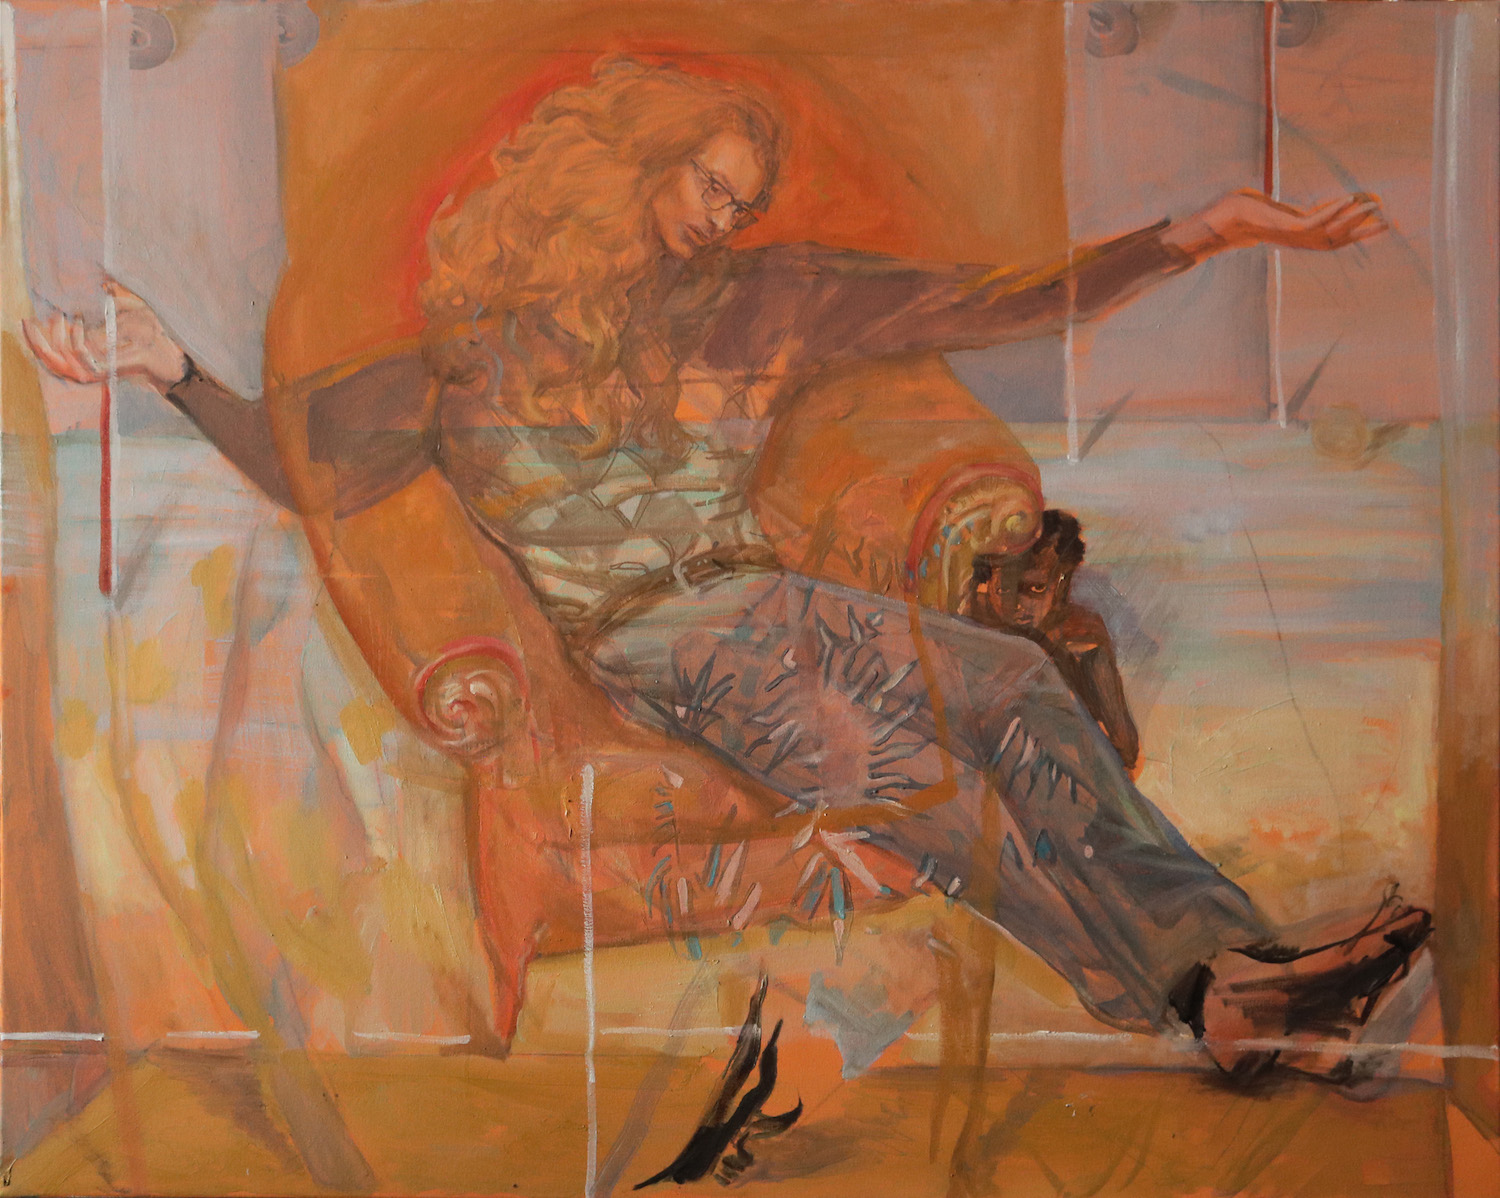 'Here I Am', Anastasia Kurakina, Oil on canvas, 80 x 100 cm